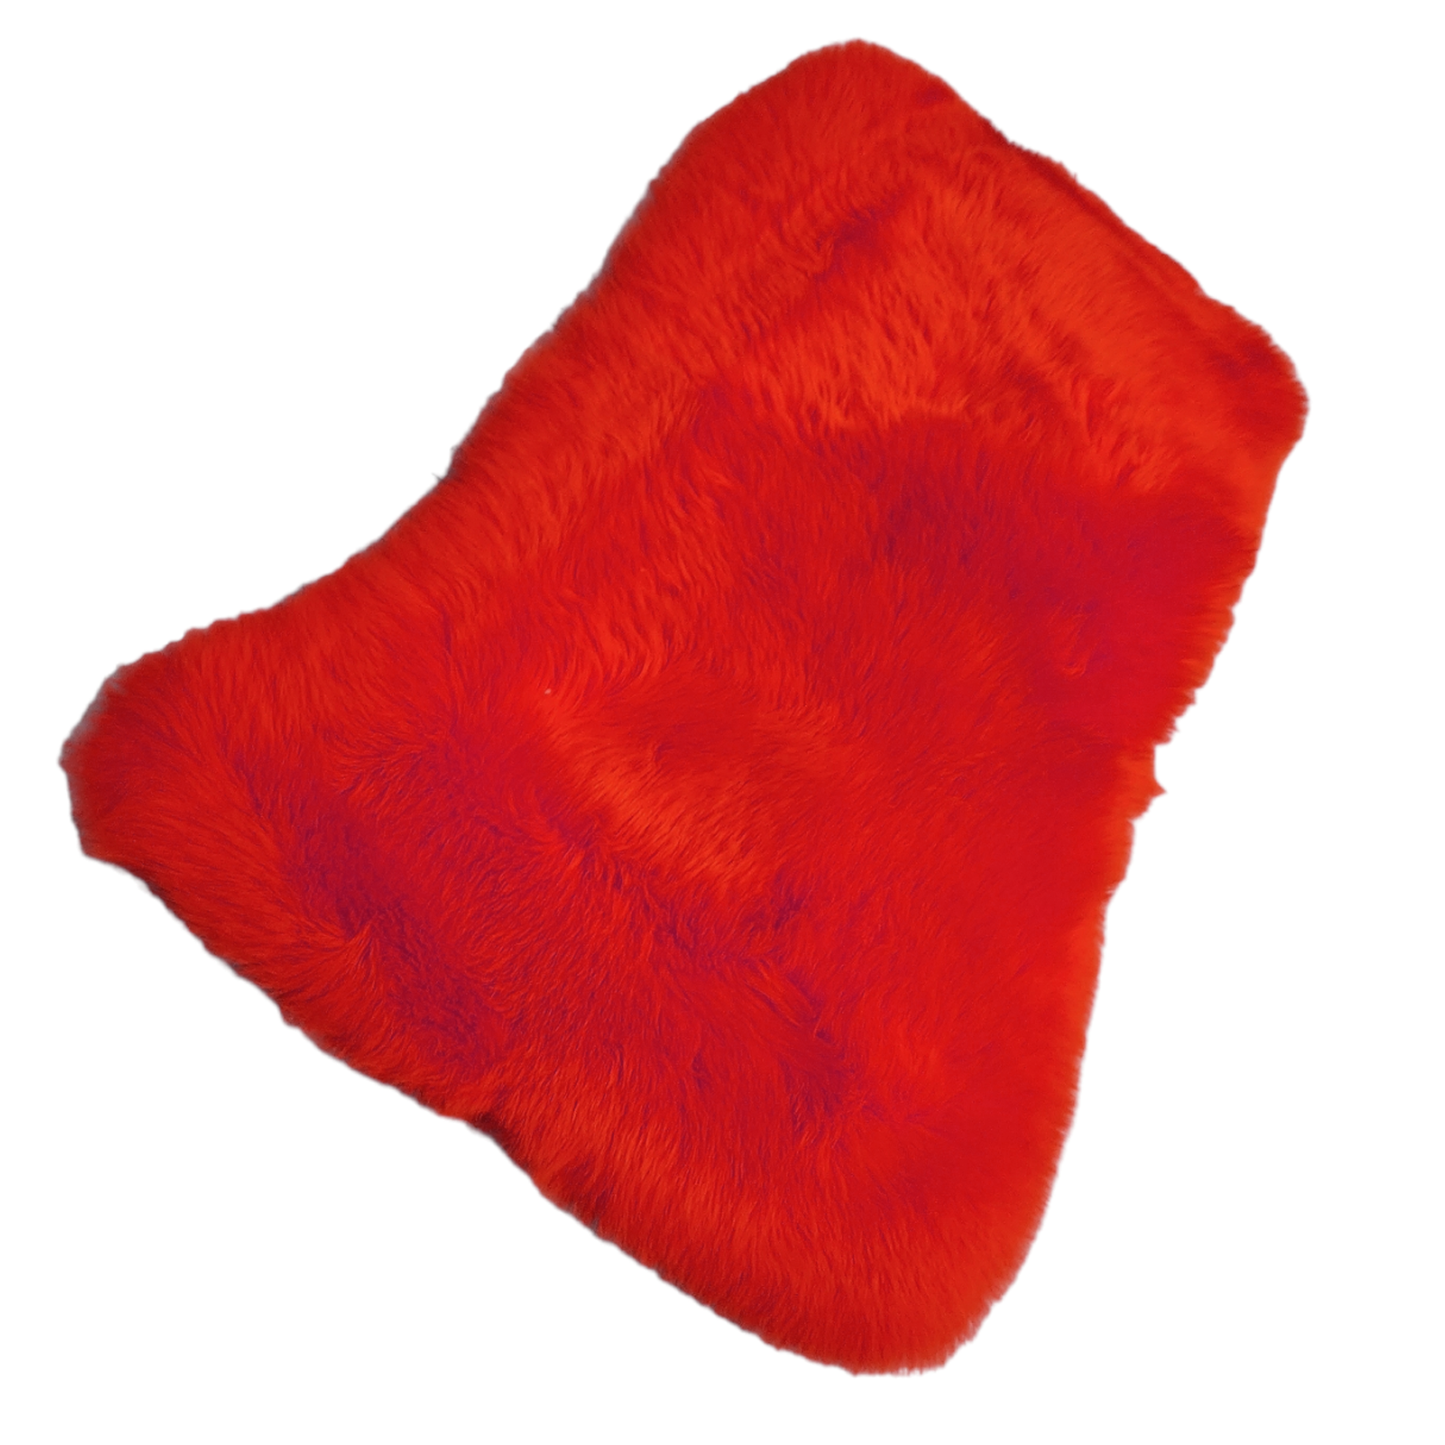 Mogul Mats Genuine Sheepskin Floor Mats Shown in Bright Red